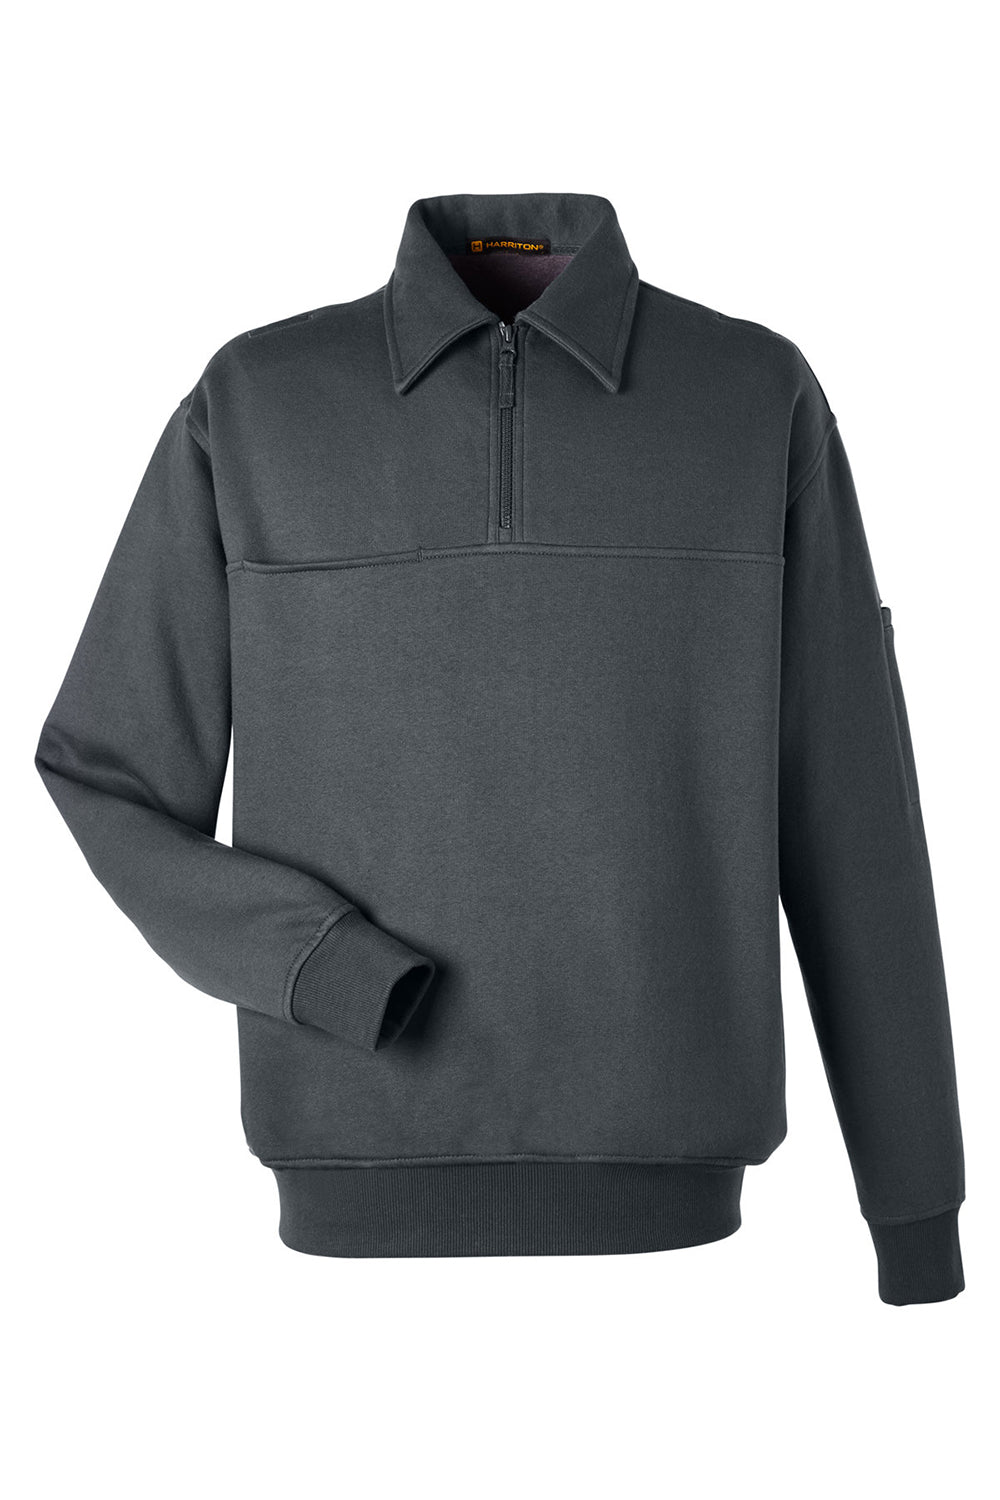 Harriton M712 Mens Climabloc 1/4 Zip Sweatshirt Dark Charcoal Grey Flat Front